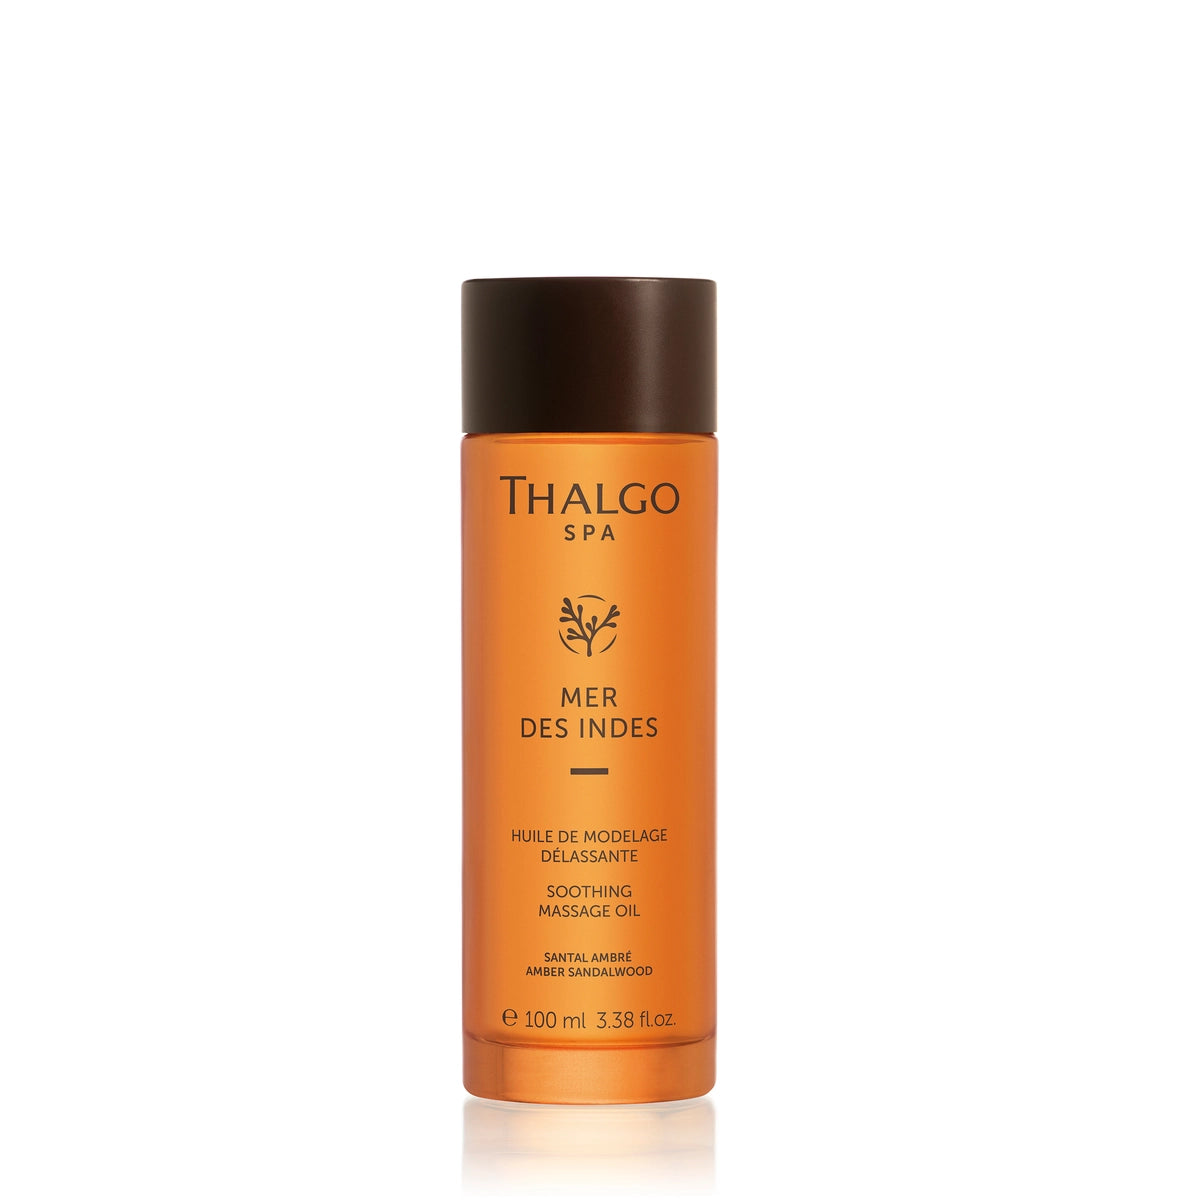 Thalgo Mer des Indes Soothing Massage Oil, 100 ml